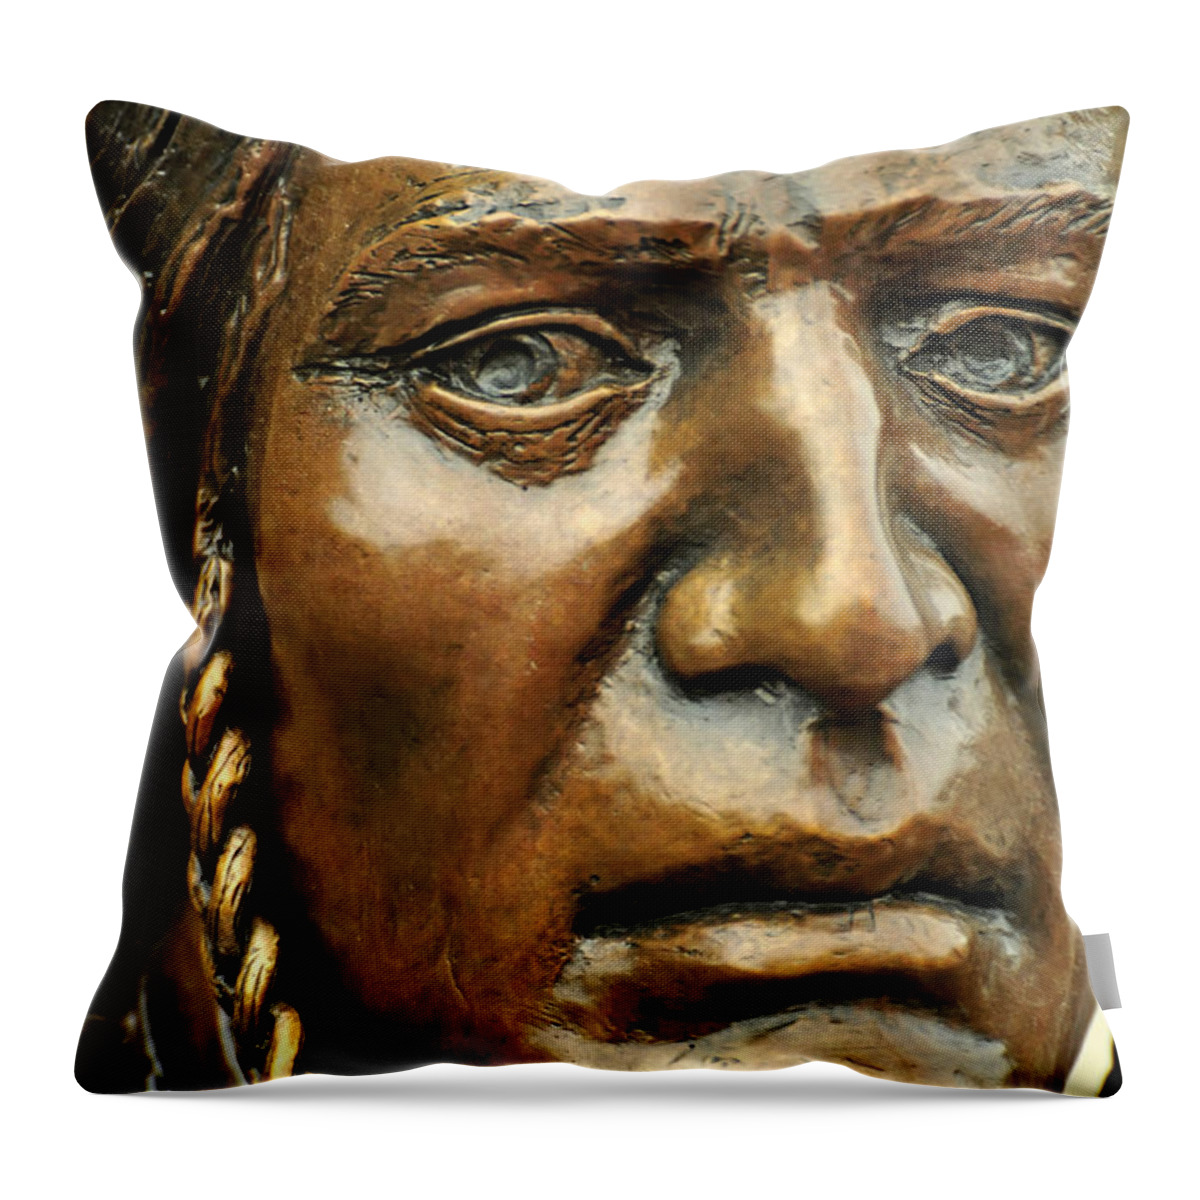 Art Throw Pillow featuring the photograph Nez Perce Indian Bronze, Joseph, Oregon by Theodore Clutter